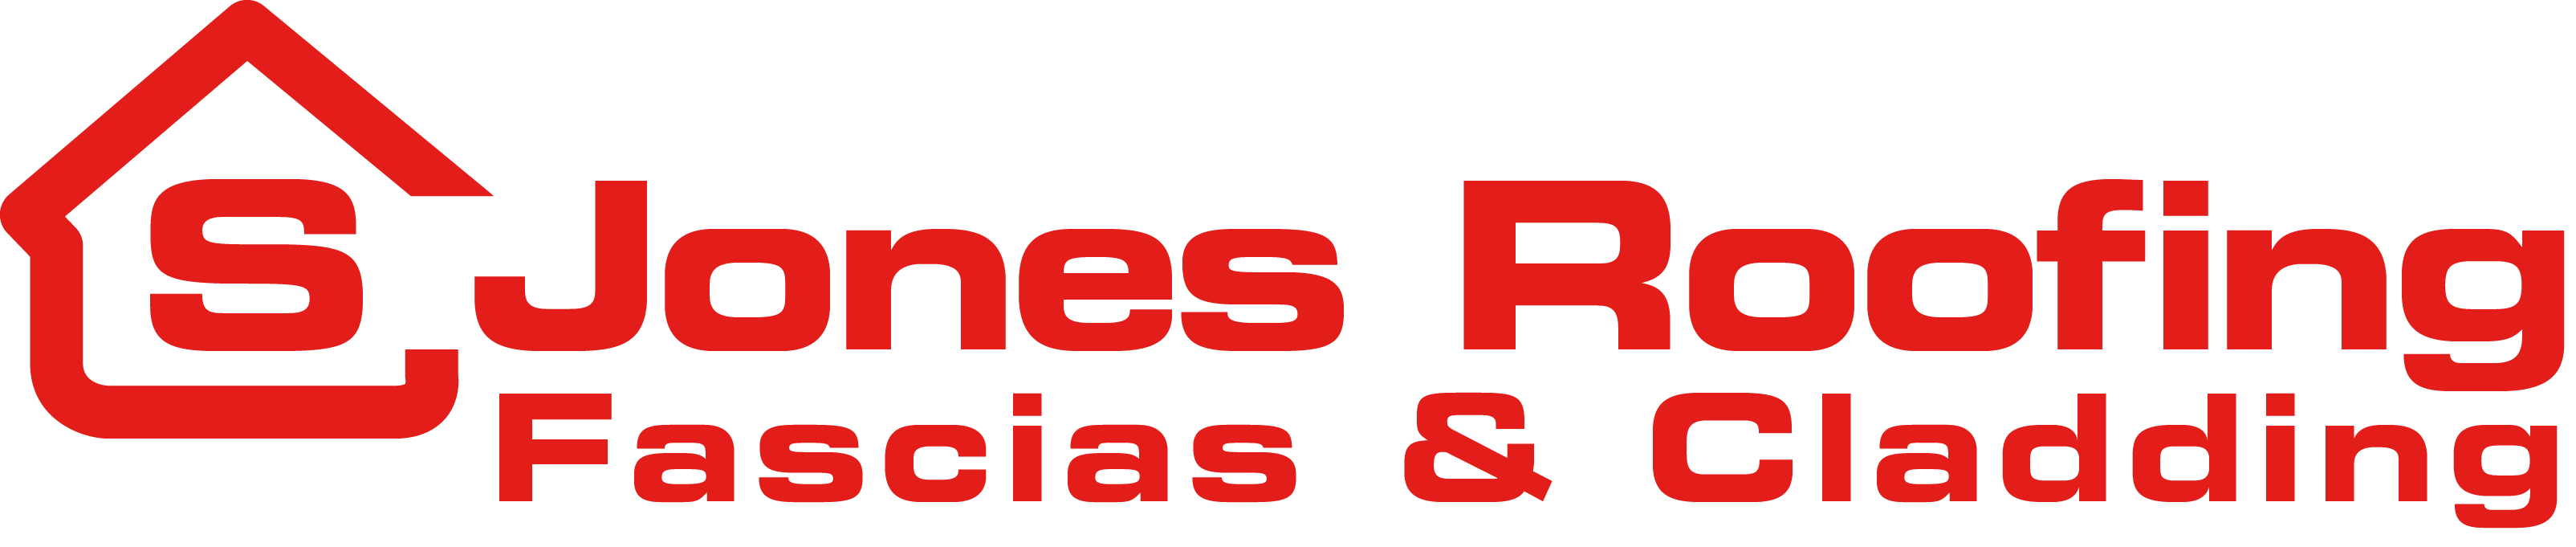 S Jones Roofing, Fascias & Cladding logo